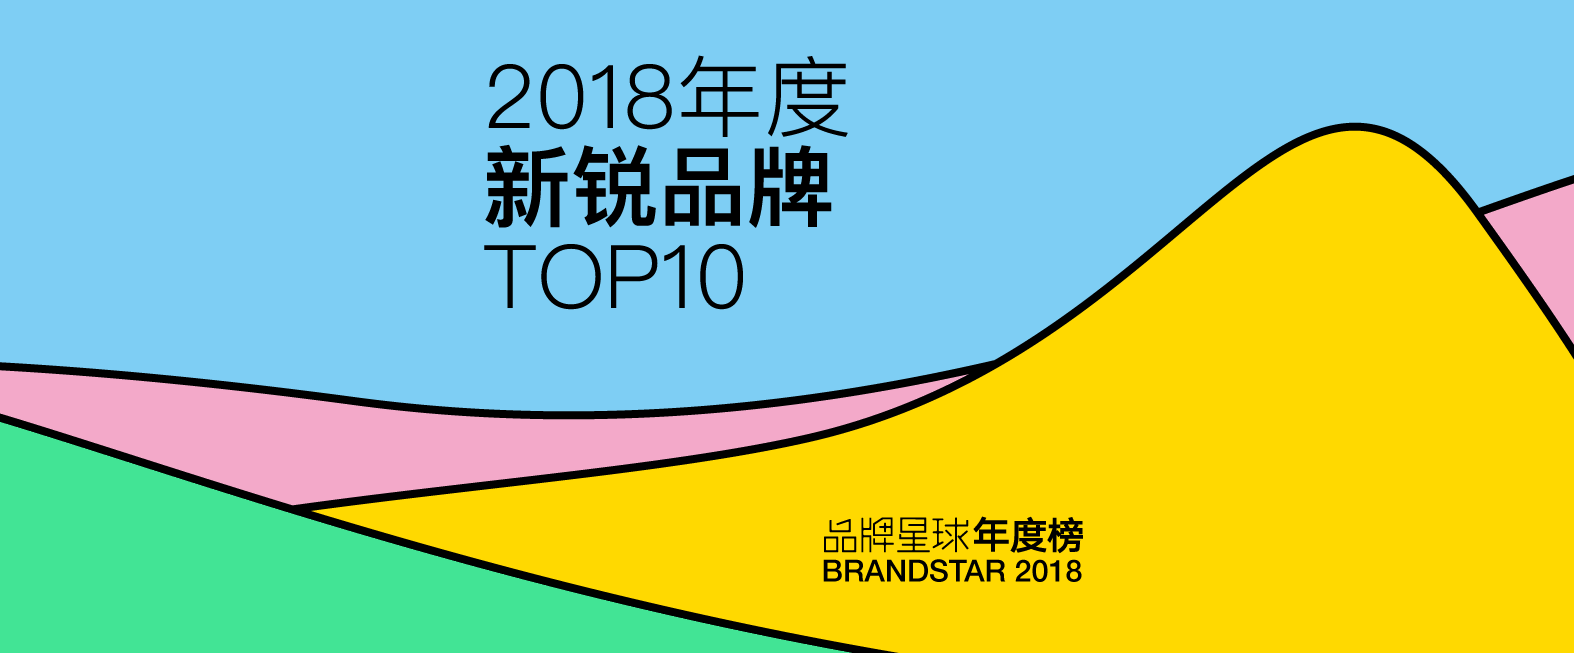 新锐品牌TOP10 | 品牌星球BrandStar 2018 年度榜单